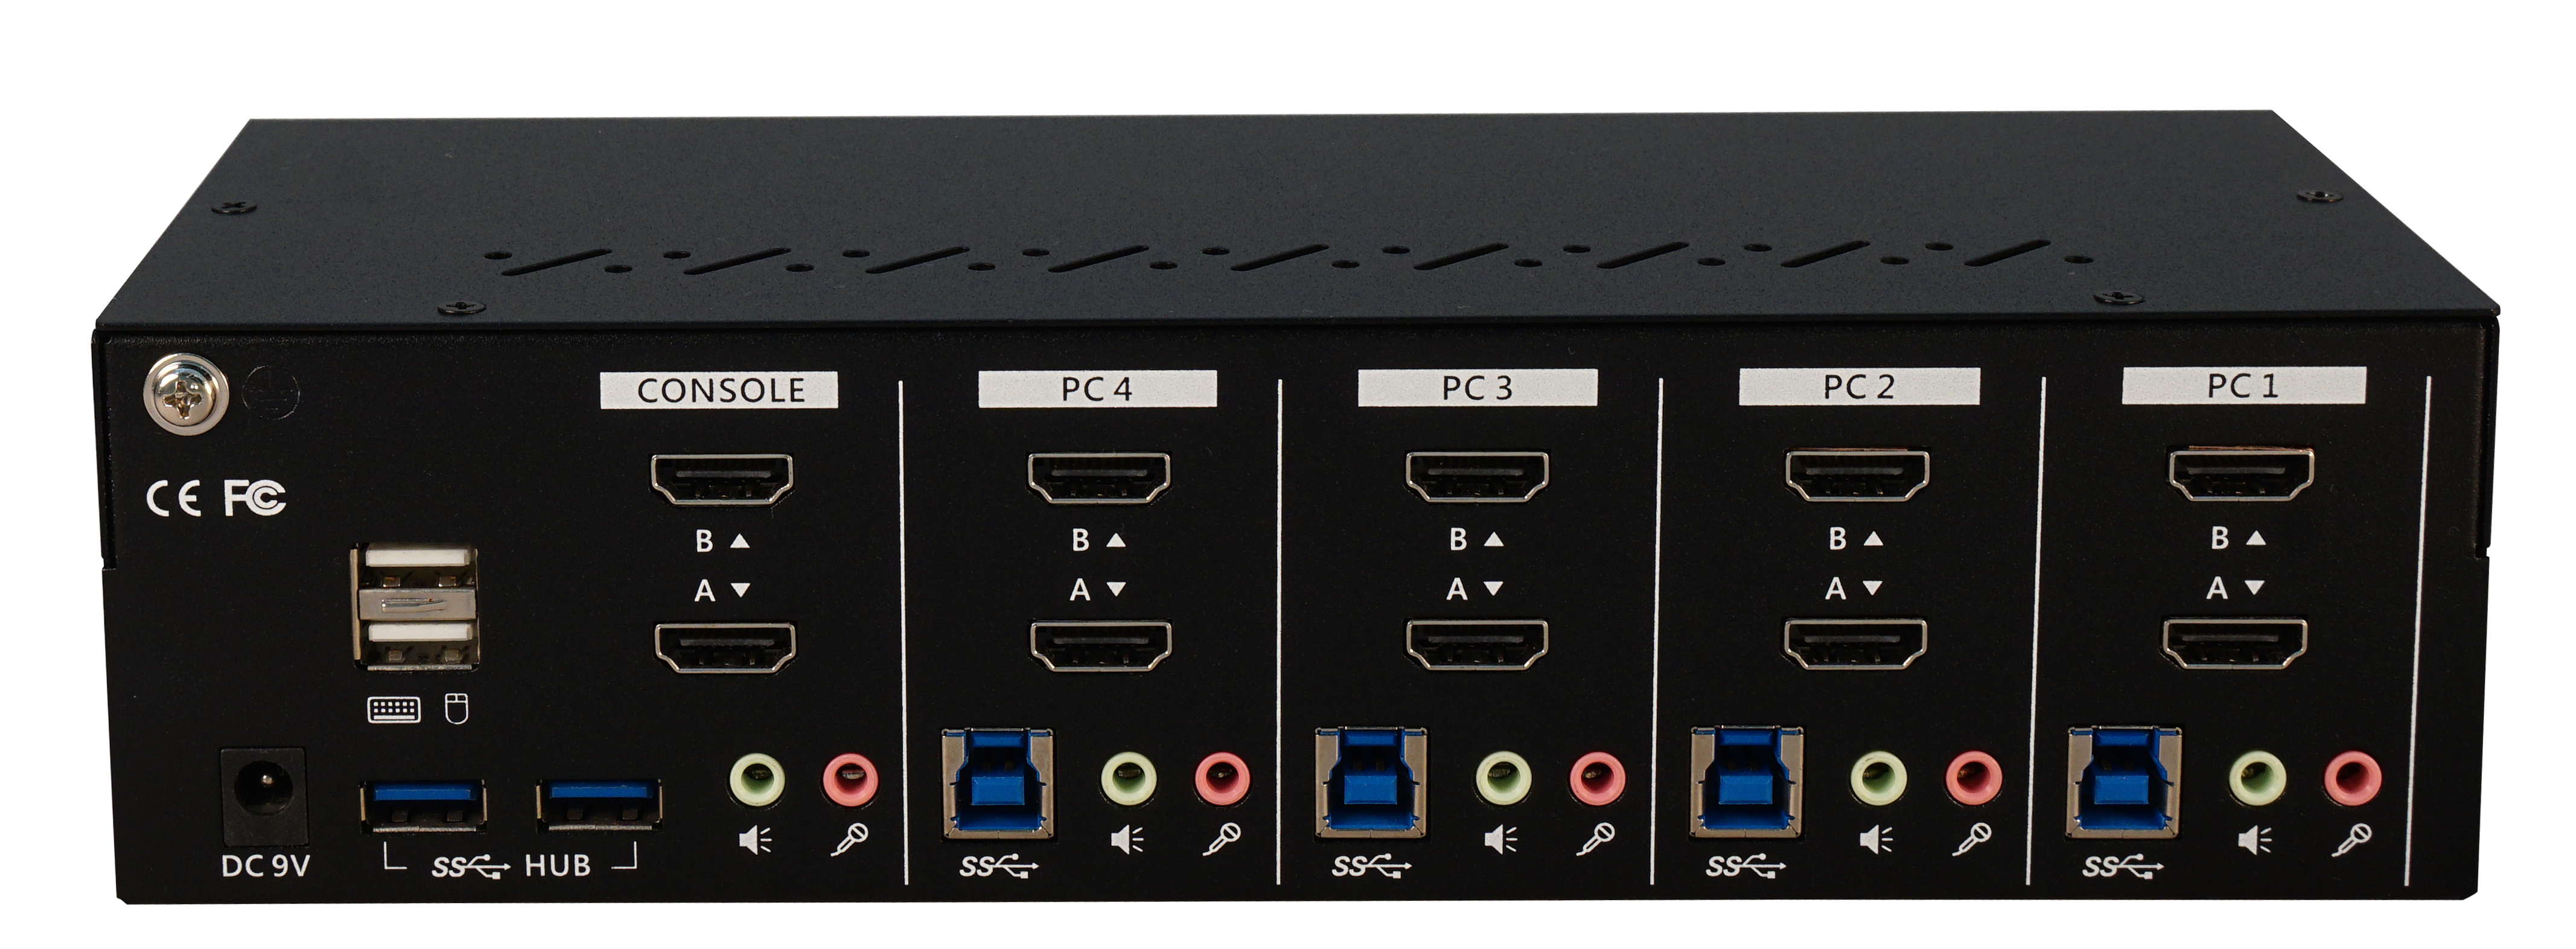 4-Port 4K 60Hz Dual-Monitor HDMI 2.0 + USB 3.0 4-Port KVM-Switch with x 1,8m PC cables, UNICLASS Ai-534iSK - KVM-Switch Versand